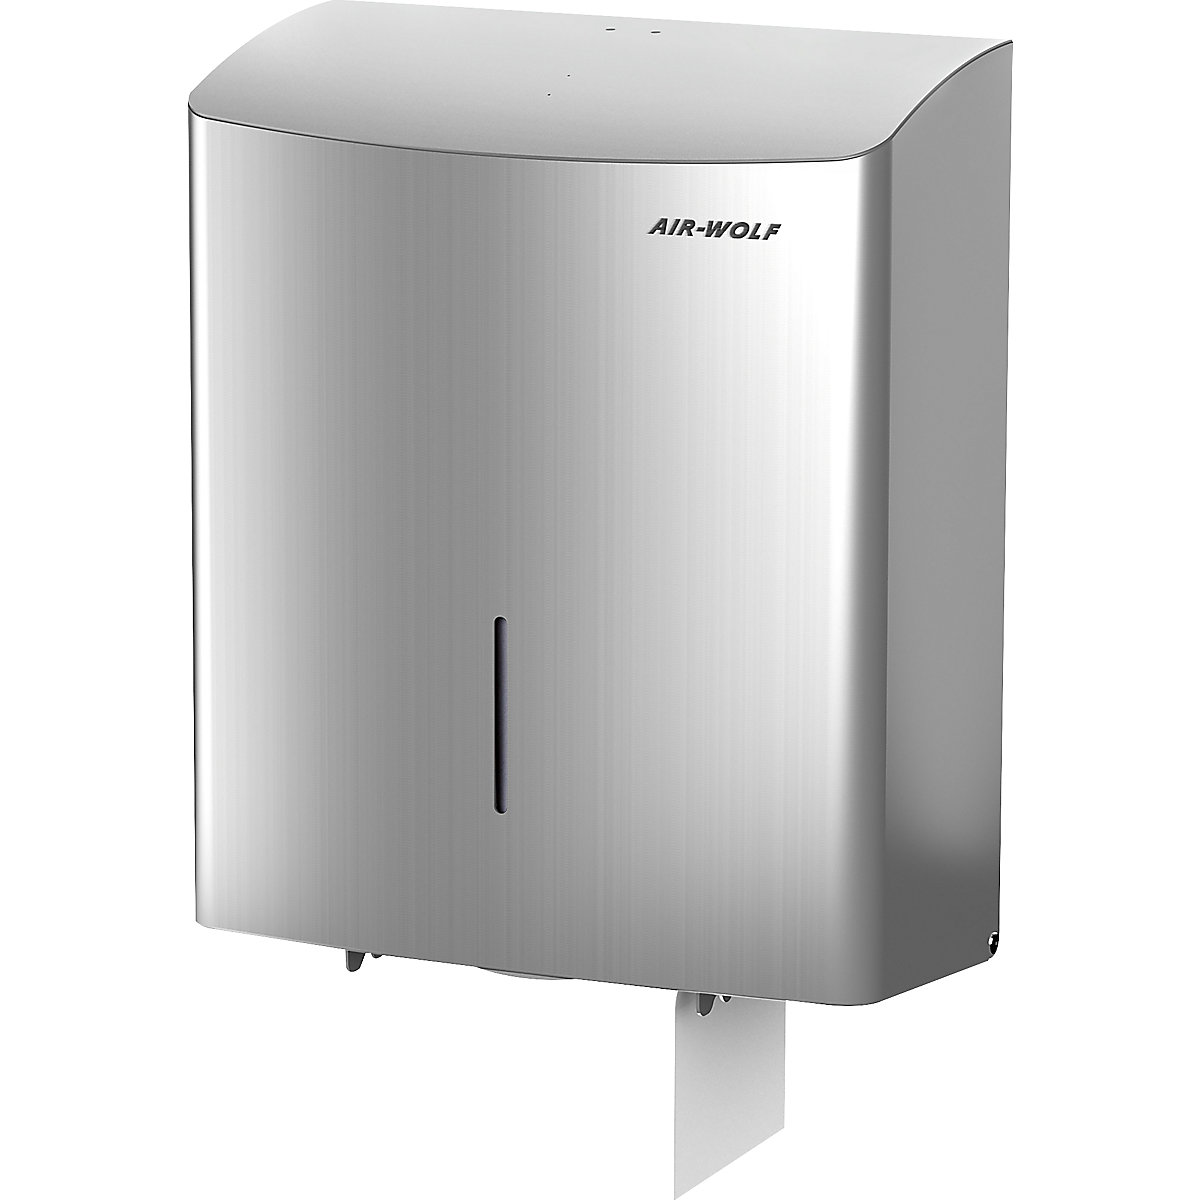 Duplex toilet paper dispenser – AIR-WOLF